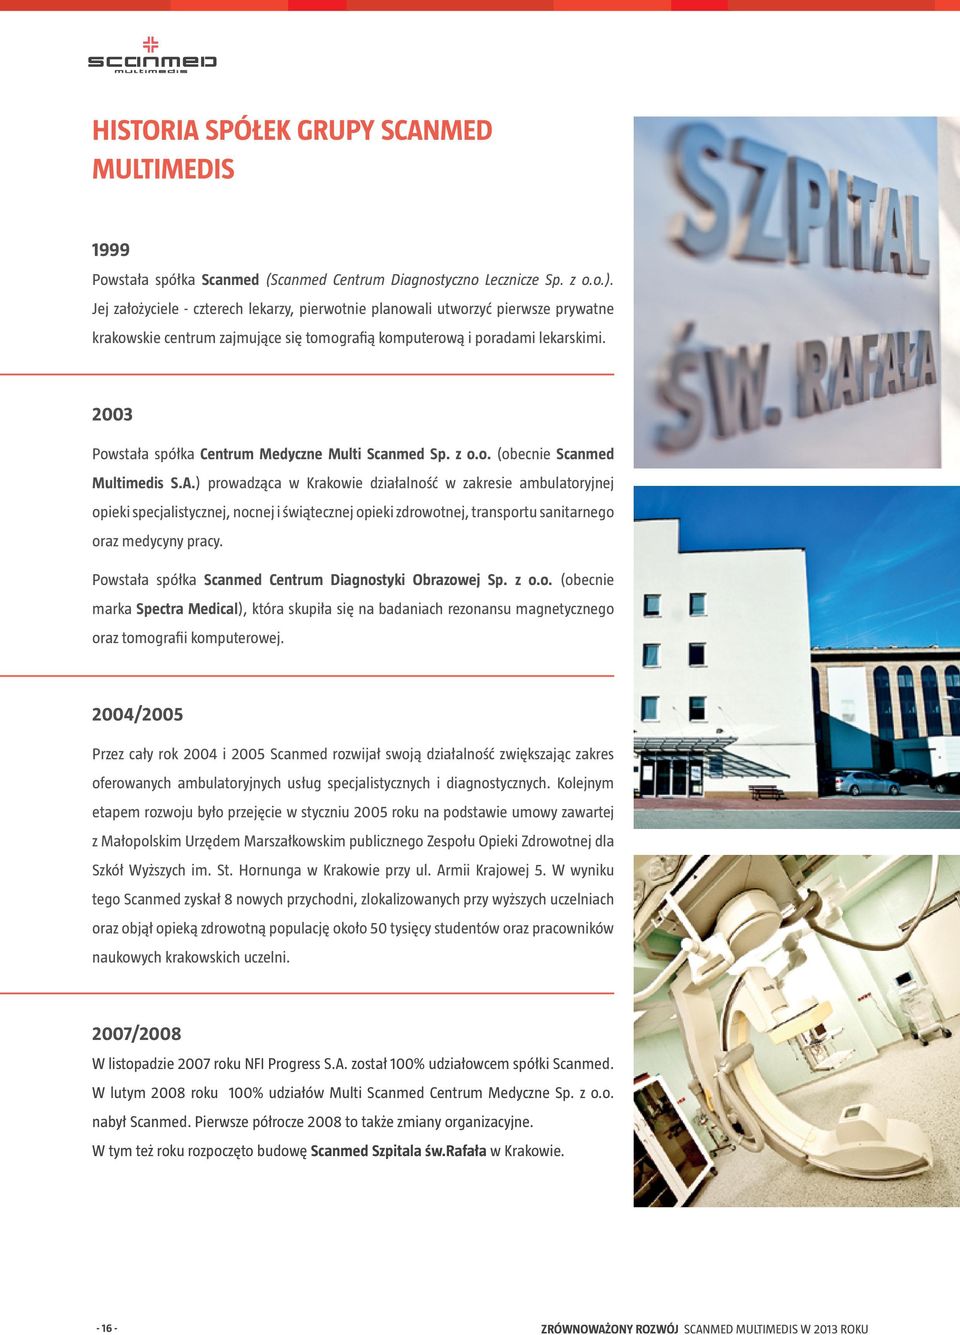 2003 Powstała spółka Centrum Medyczne Multi Scanmed Sp. z o.o. (obecnie Scanmed Multimedis S.A.